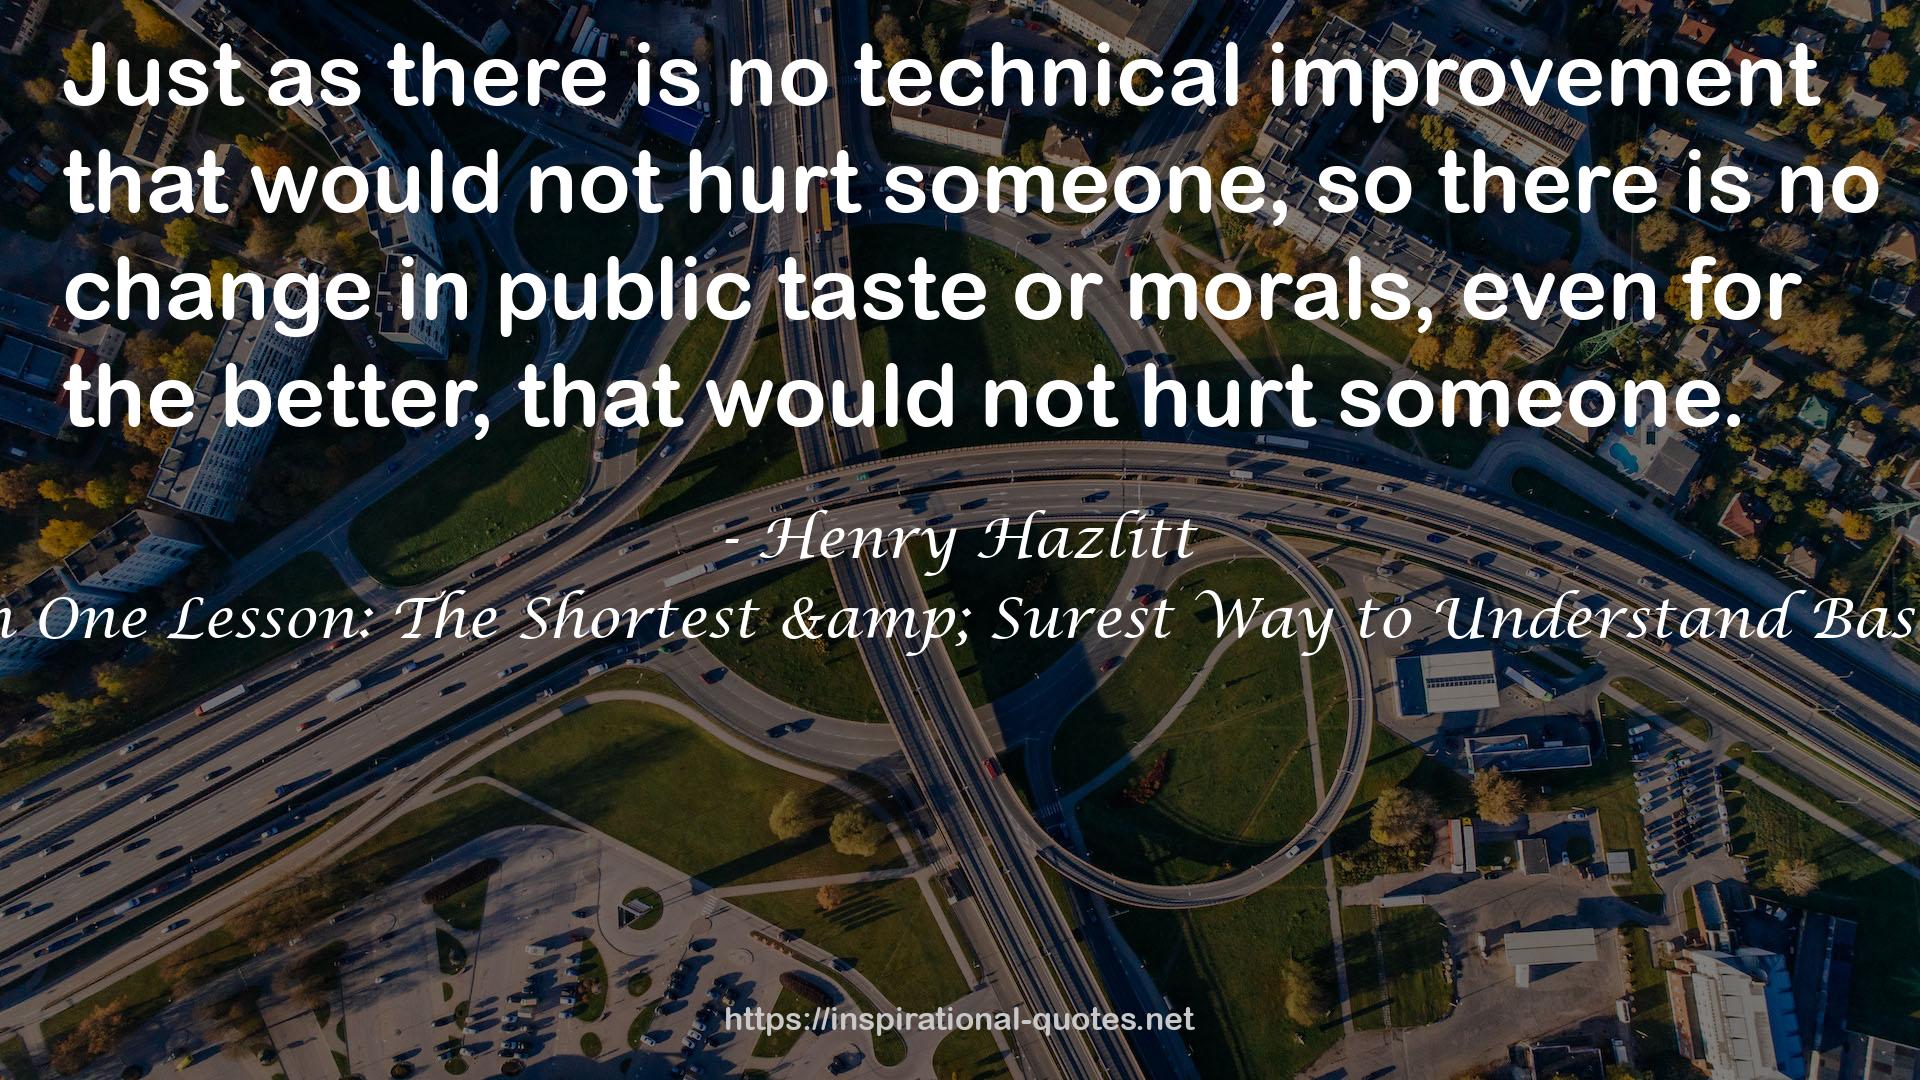 Henry Hazlitt QUOTES